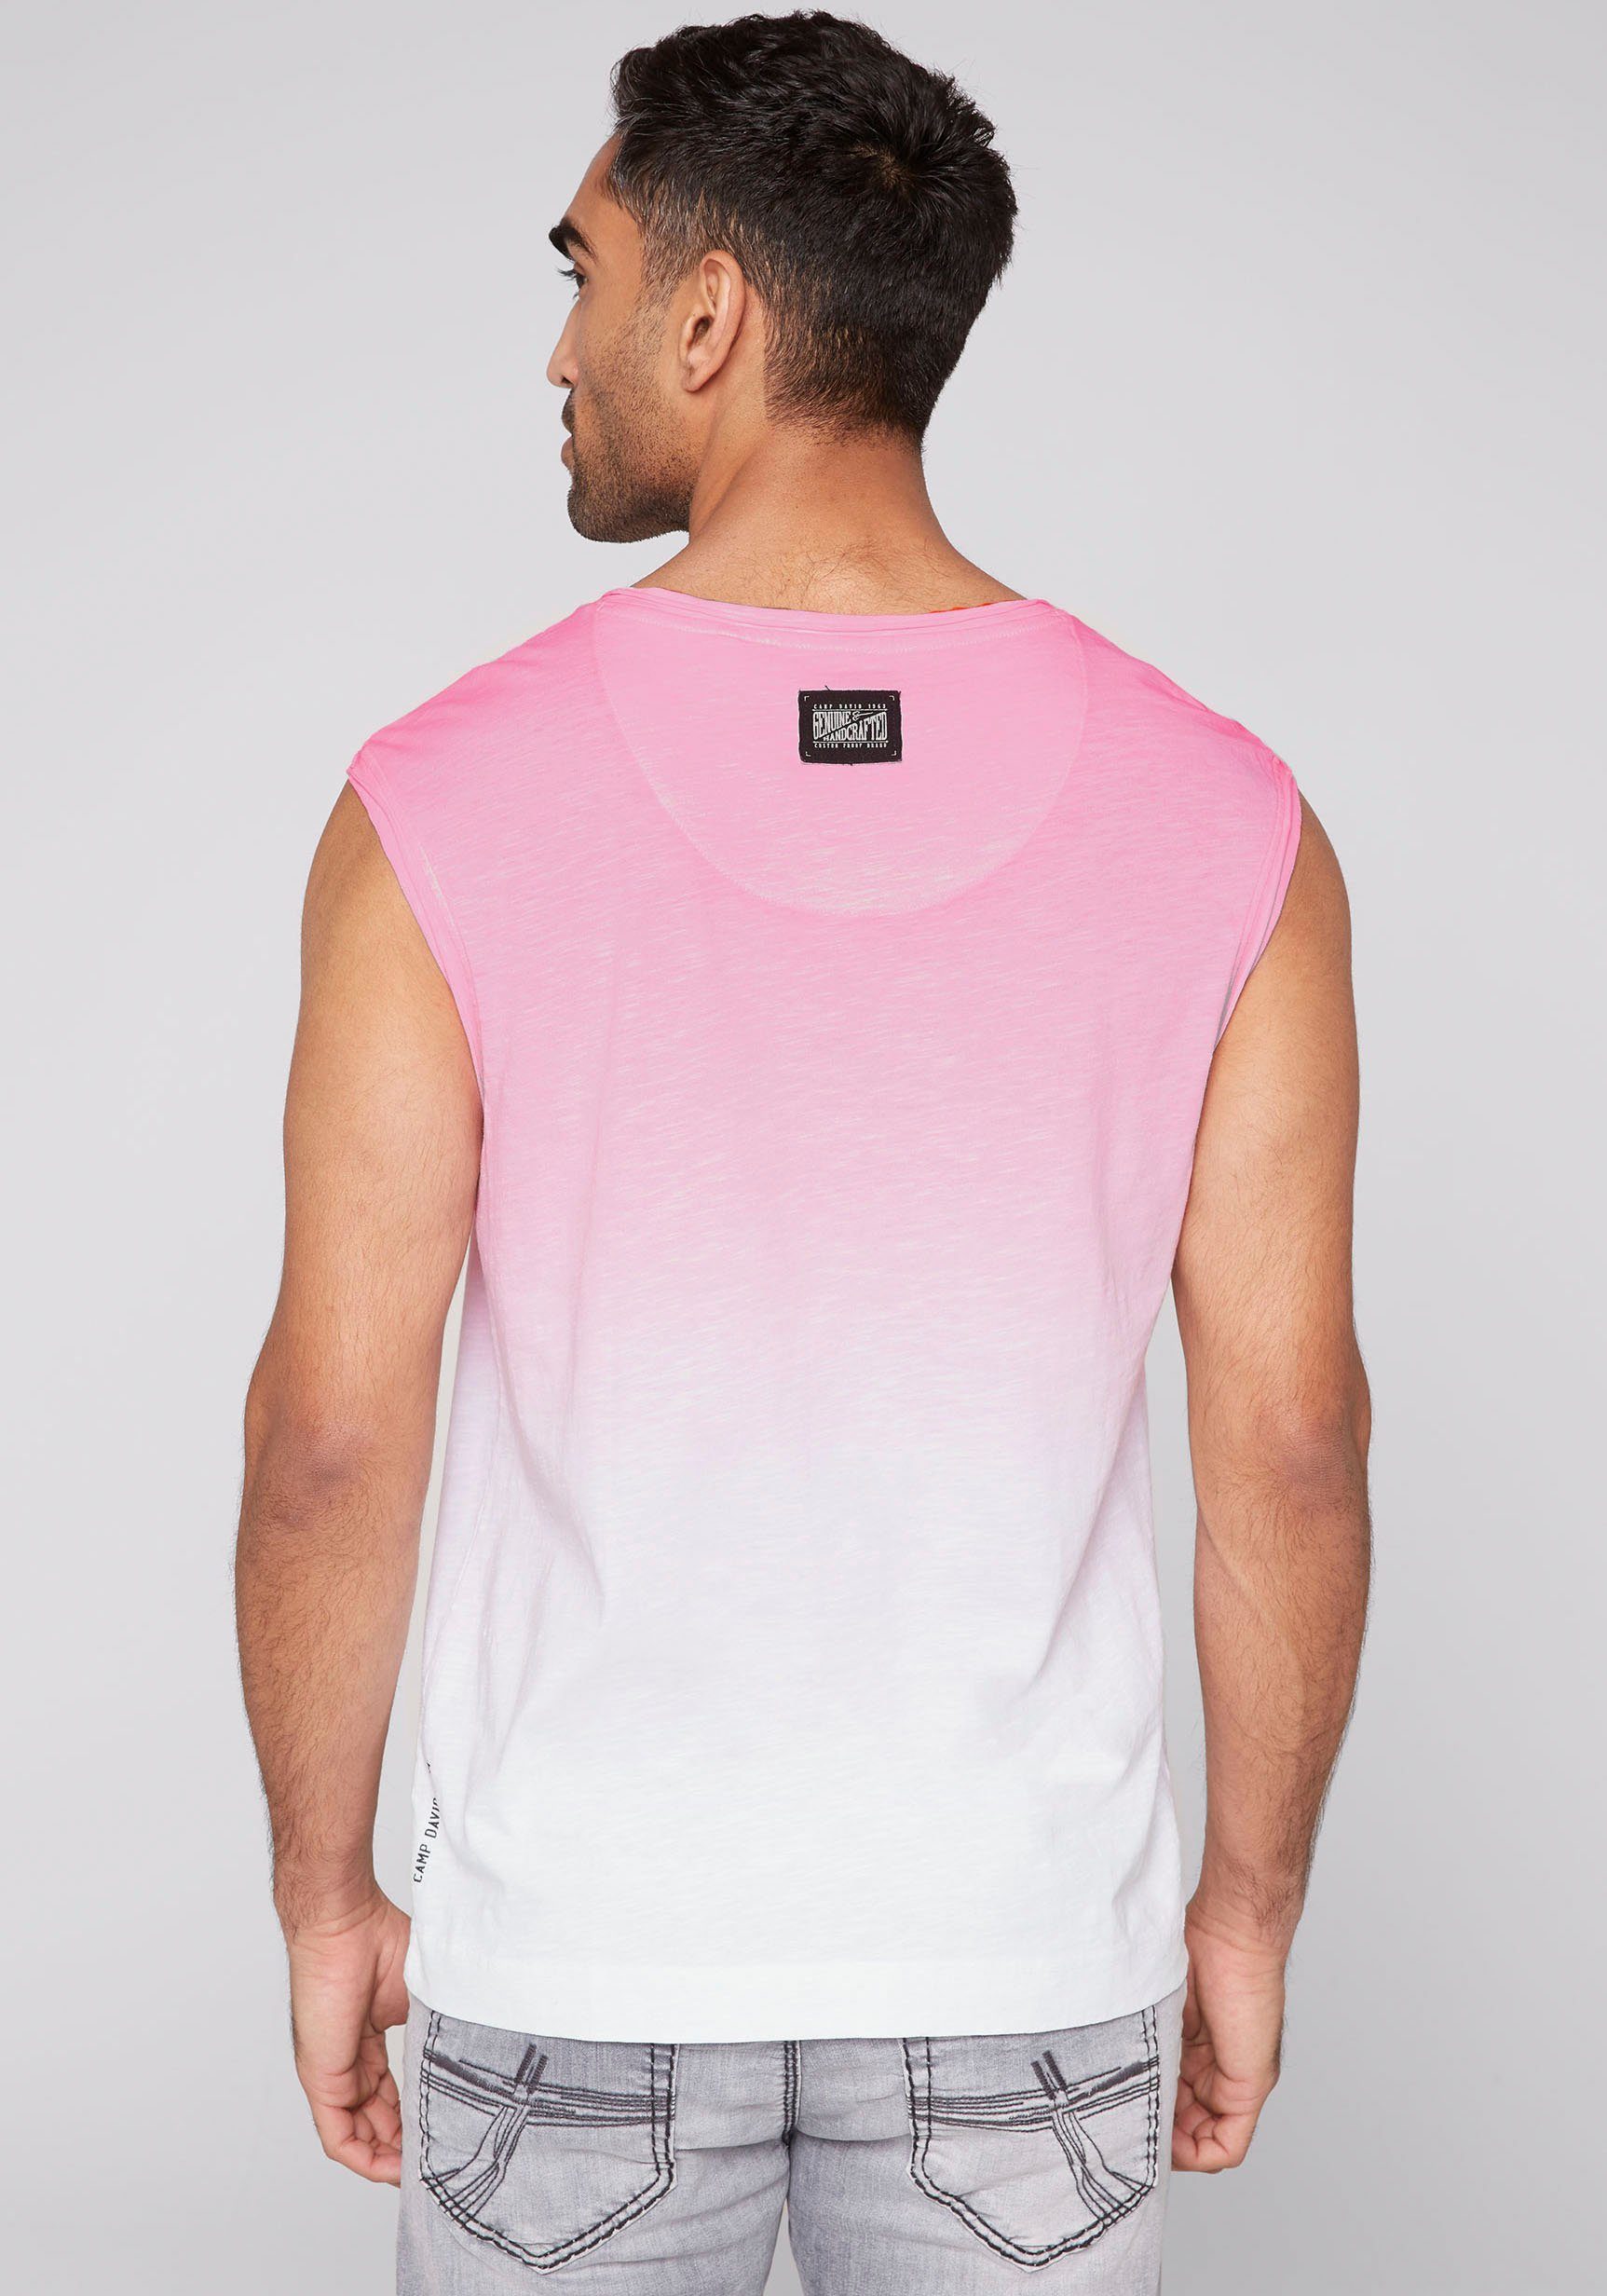 neon / CAMP V-Shirt DAVID pink opticwhite